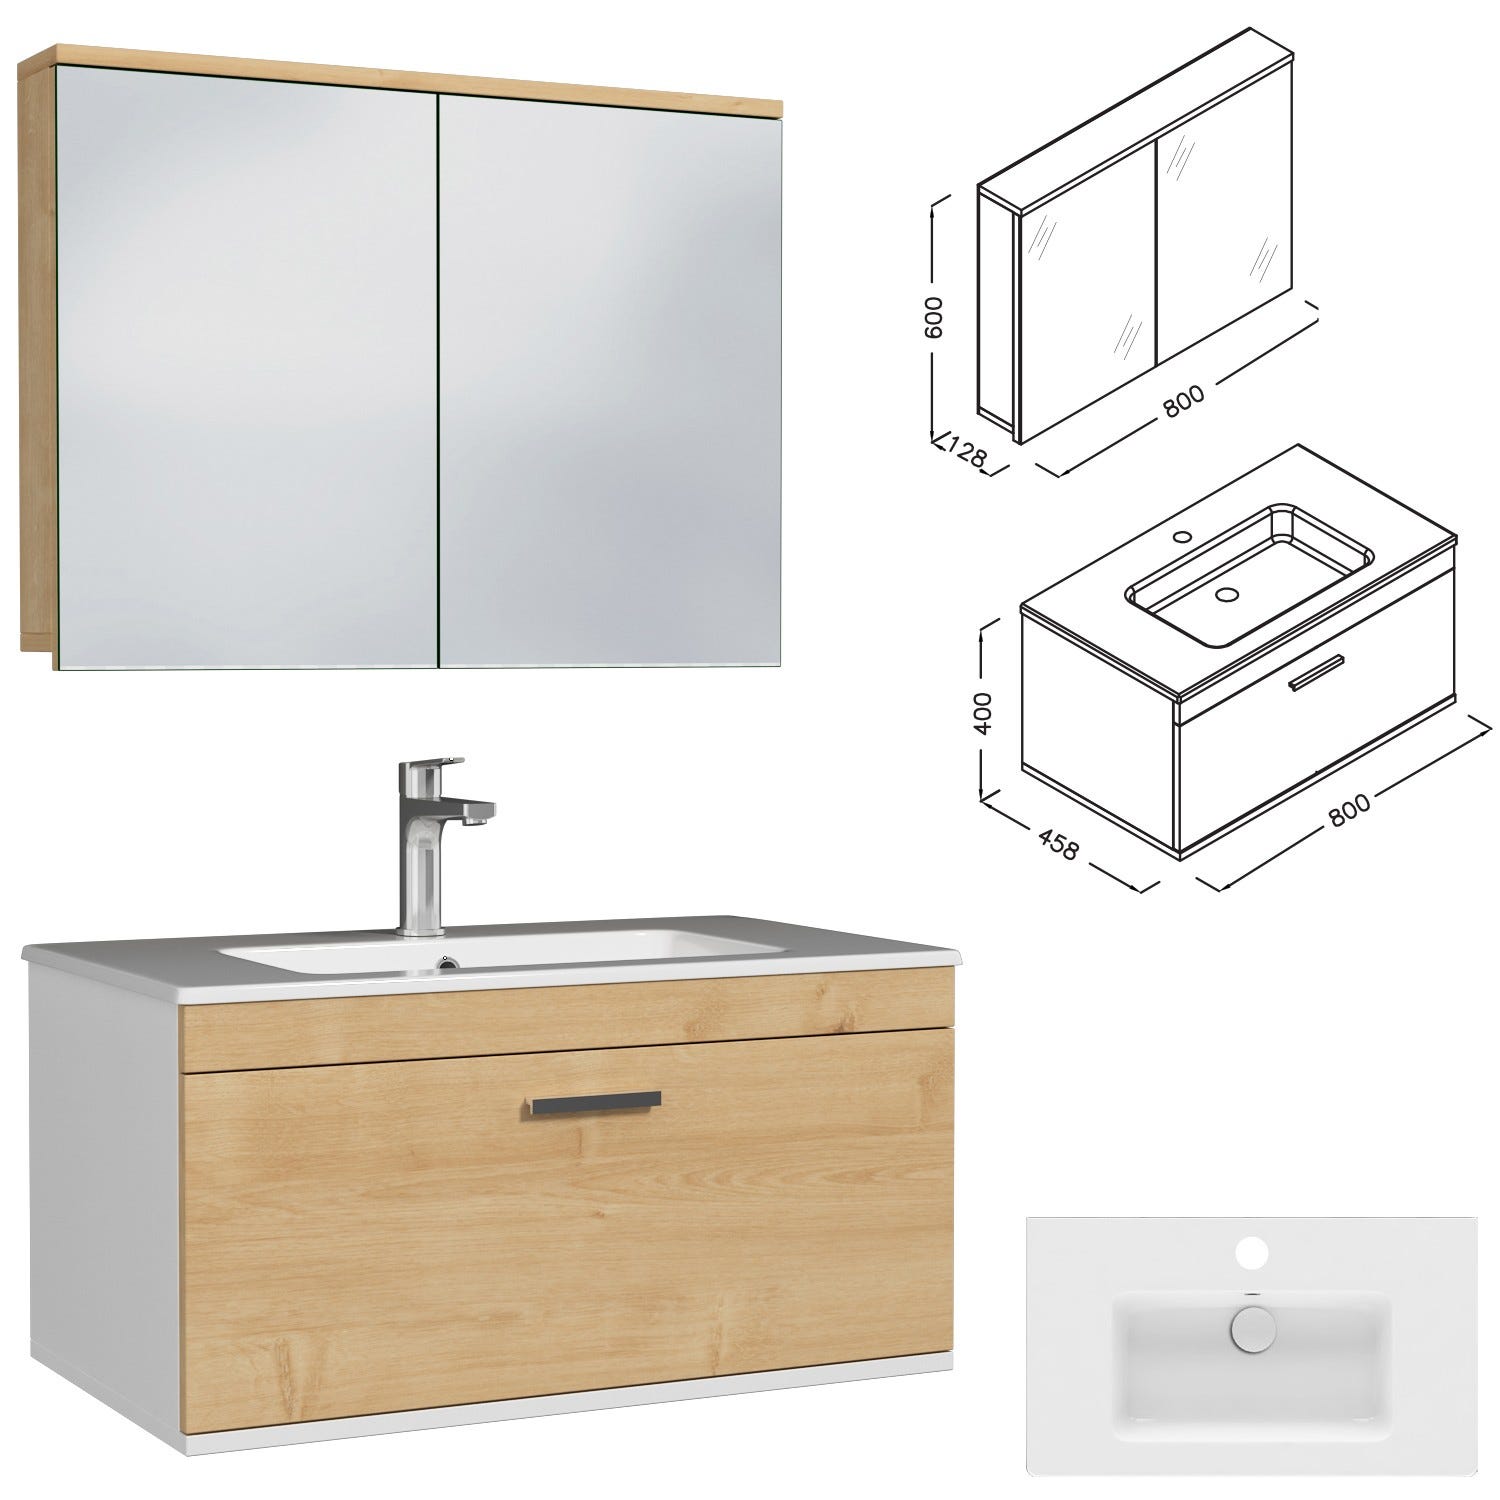 RUBITE Meuble salle de bain simple vasque 1 tiroir chêne clair largeur 80 cm + miroir armoire 2